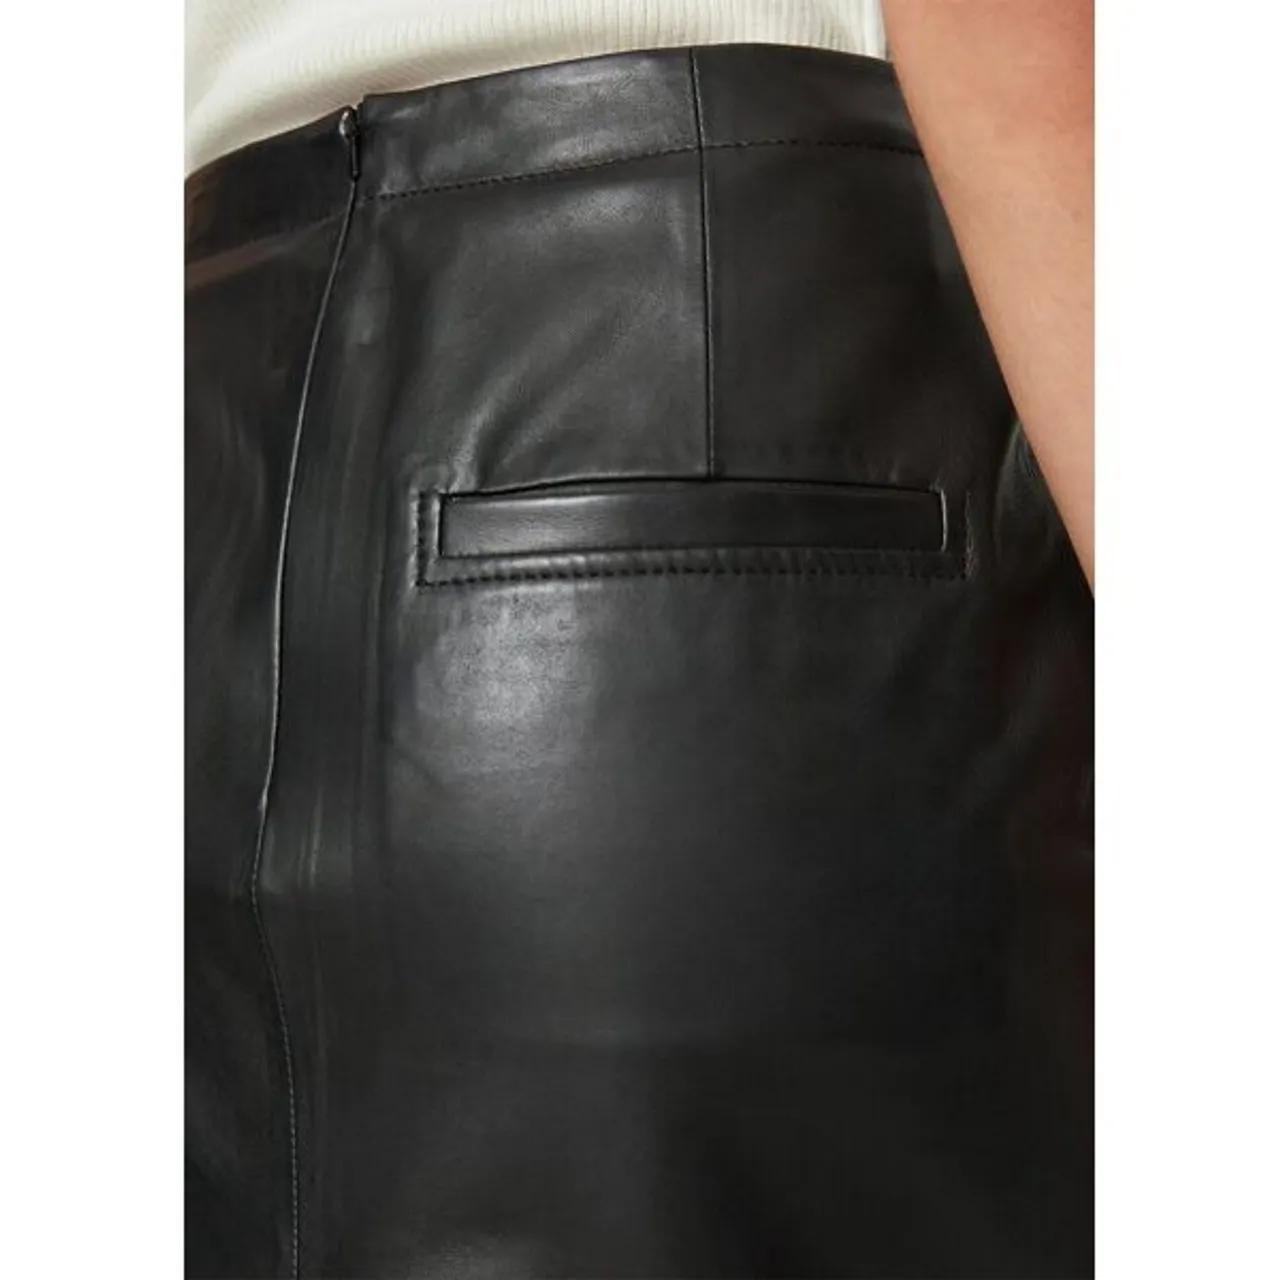 Lederrock MARC O'POLO "aus softem Lammleder" Gr. 32, schwarz Damen Röcke Lederröcke